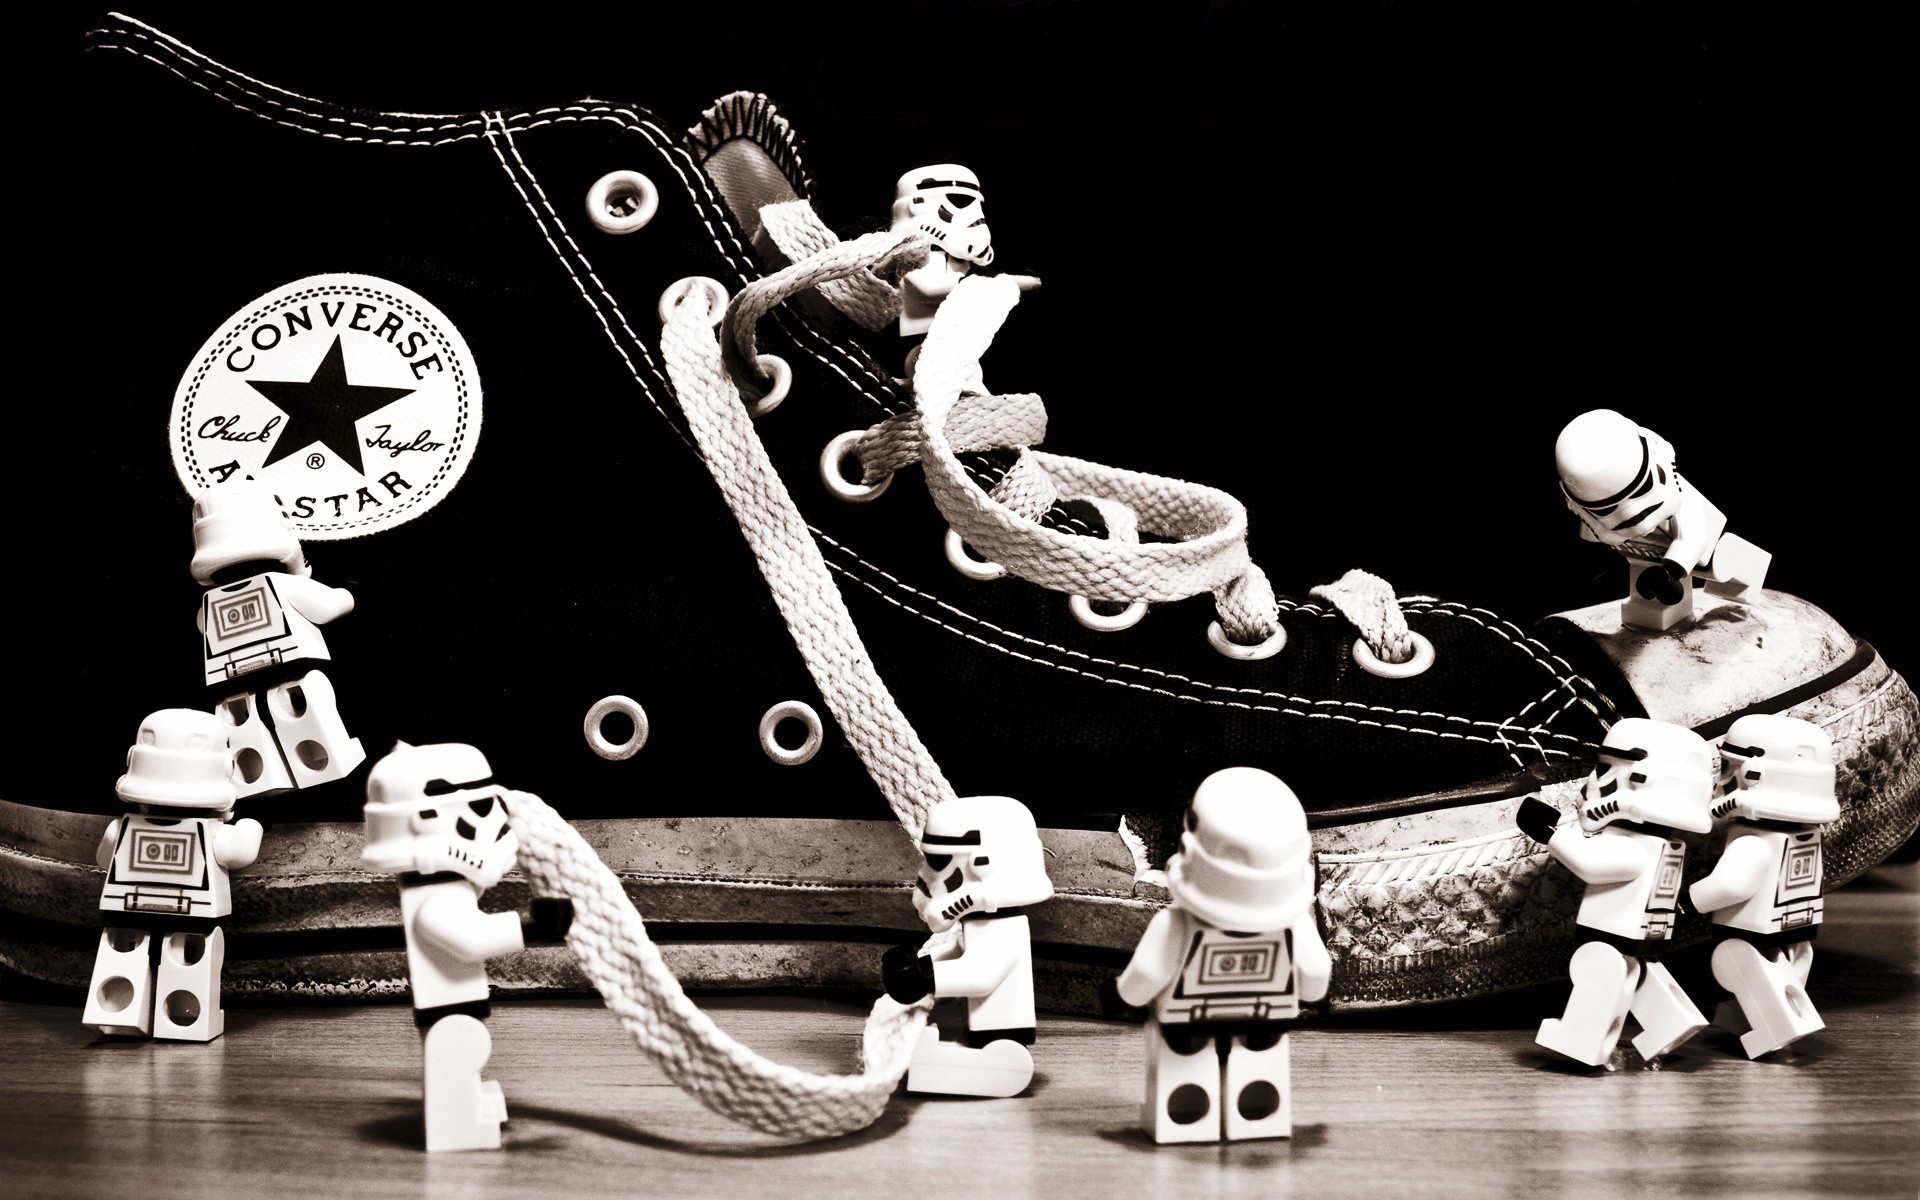 Star Wars Converse Lego Monochrome Shoe Stormtrooper 1920x1200